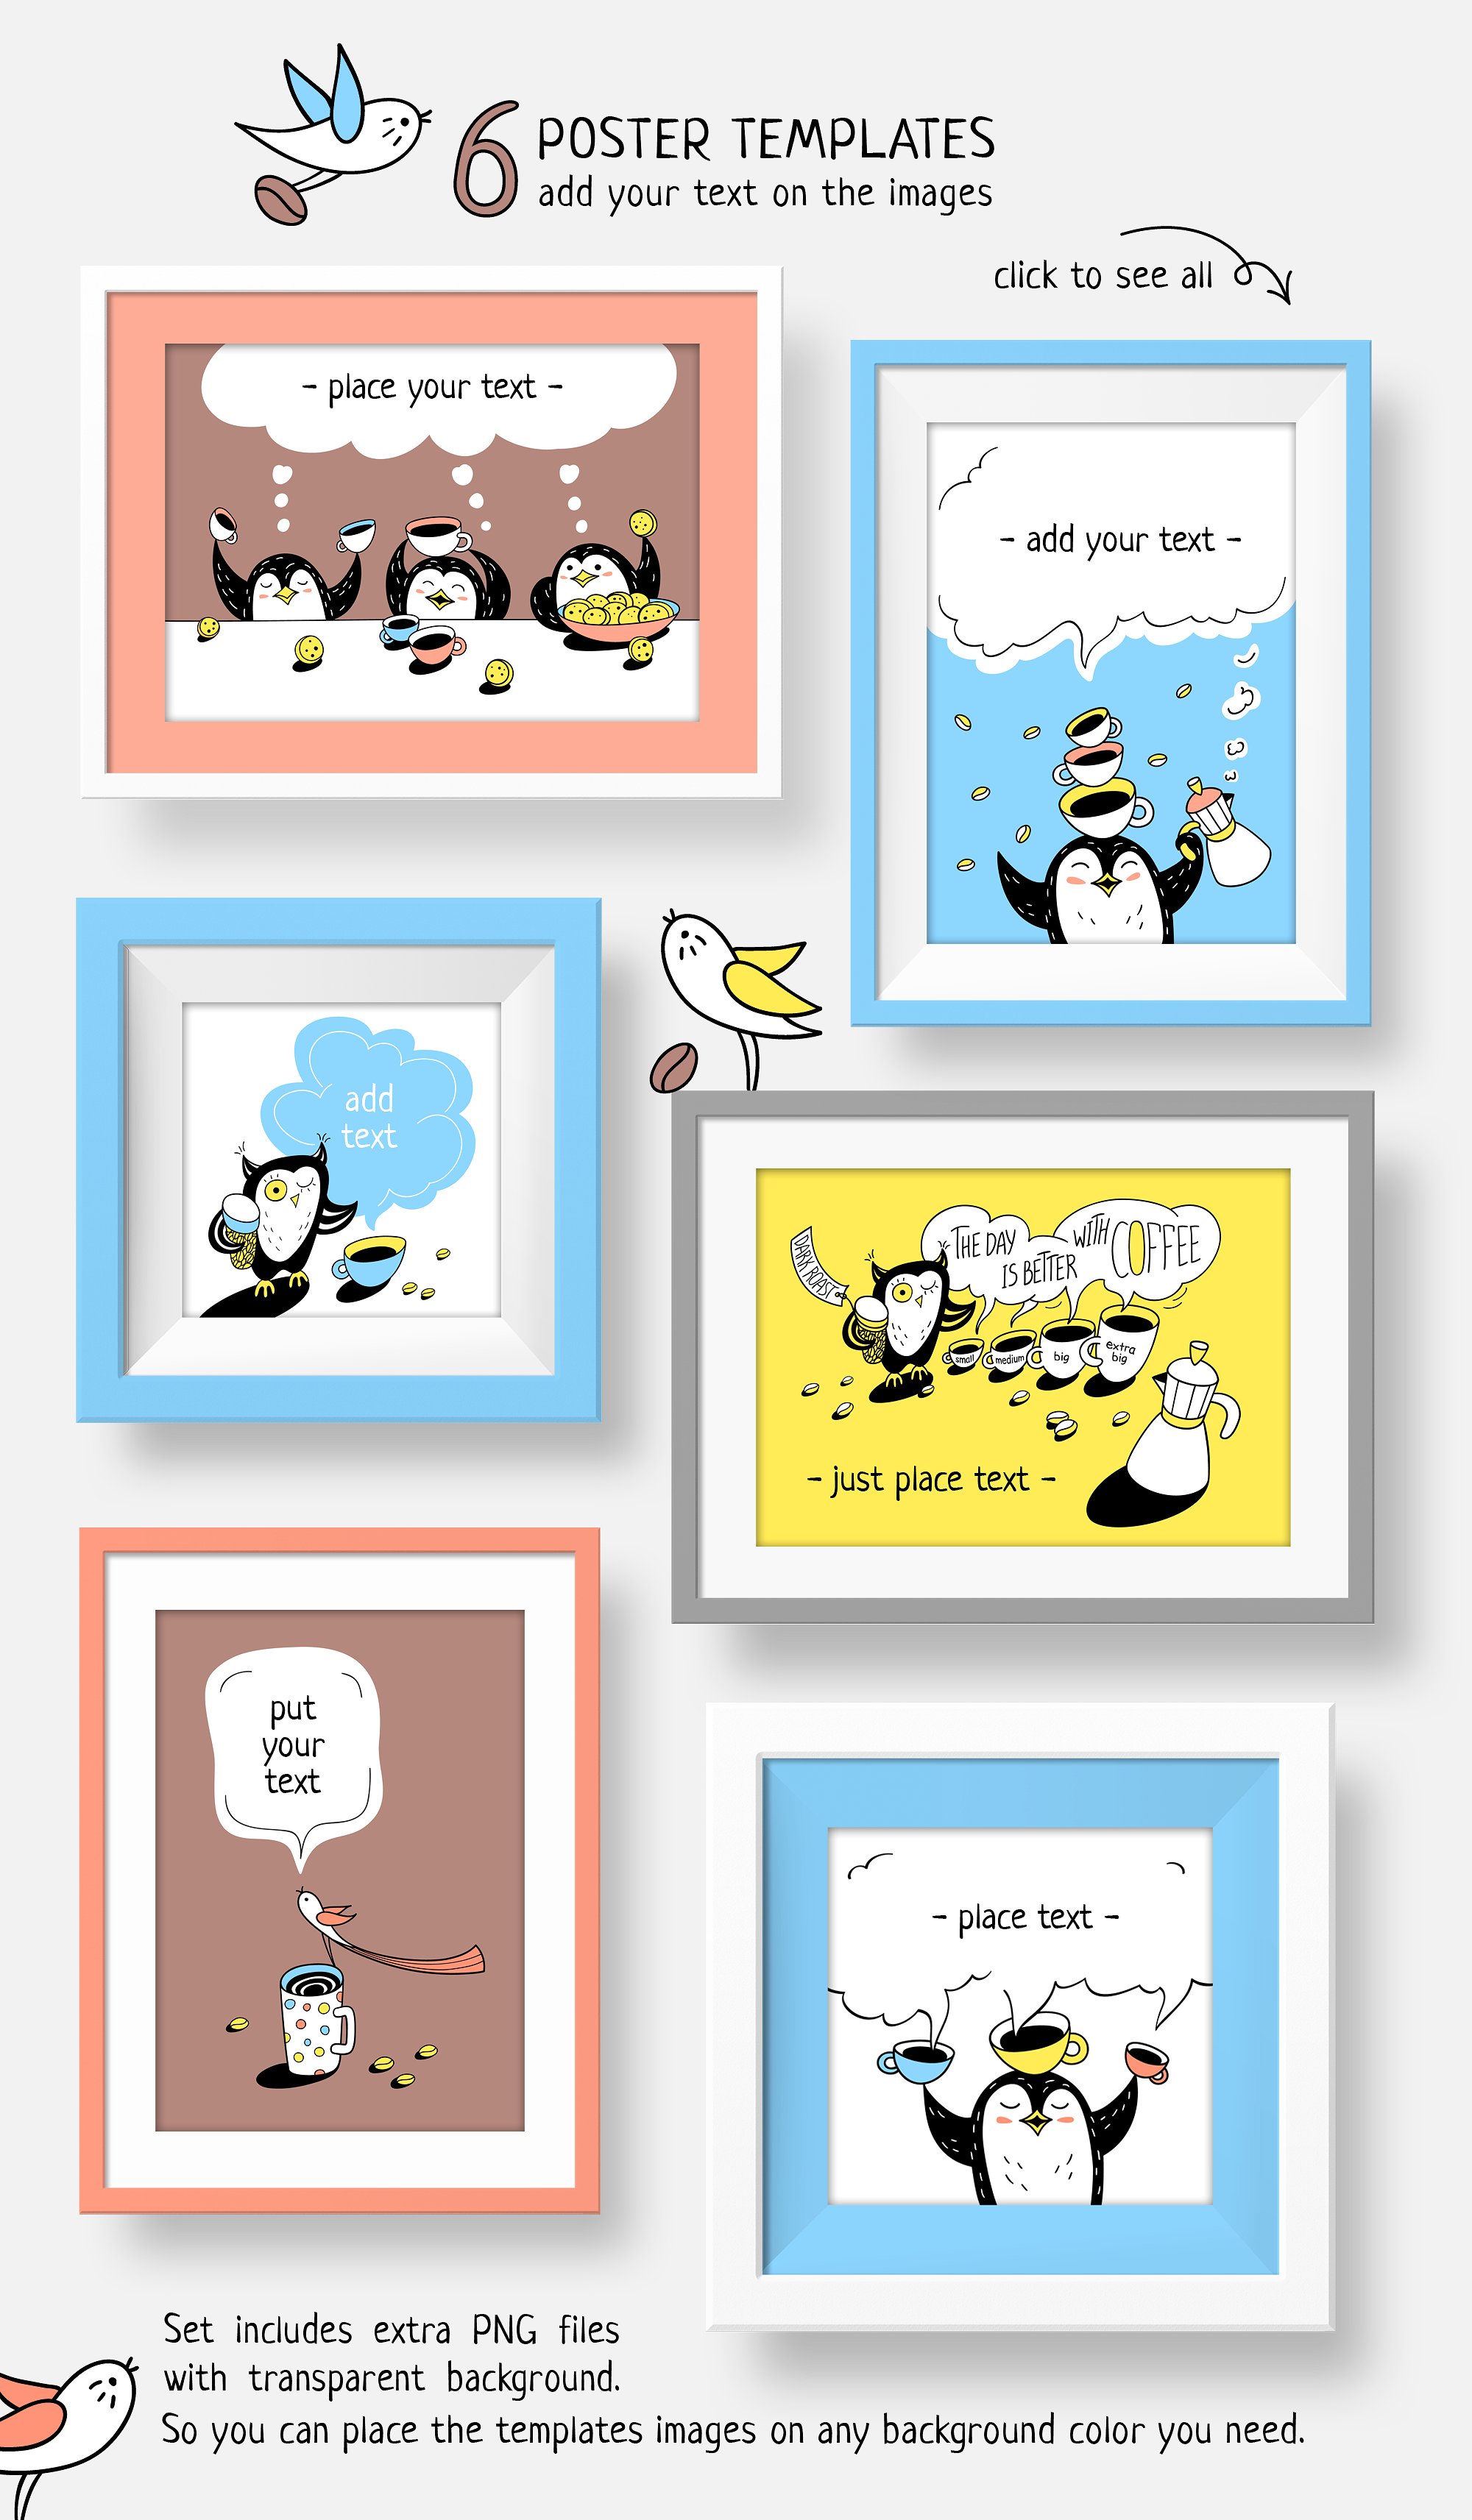 EVERY EARLY BIRD NEEDS COFFEE-手绘卡通咖啡插图素材下载[eps,png]插图(10)